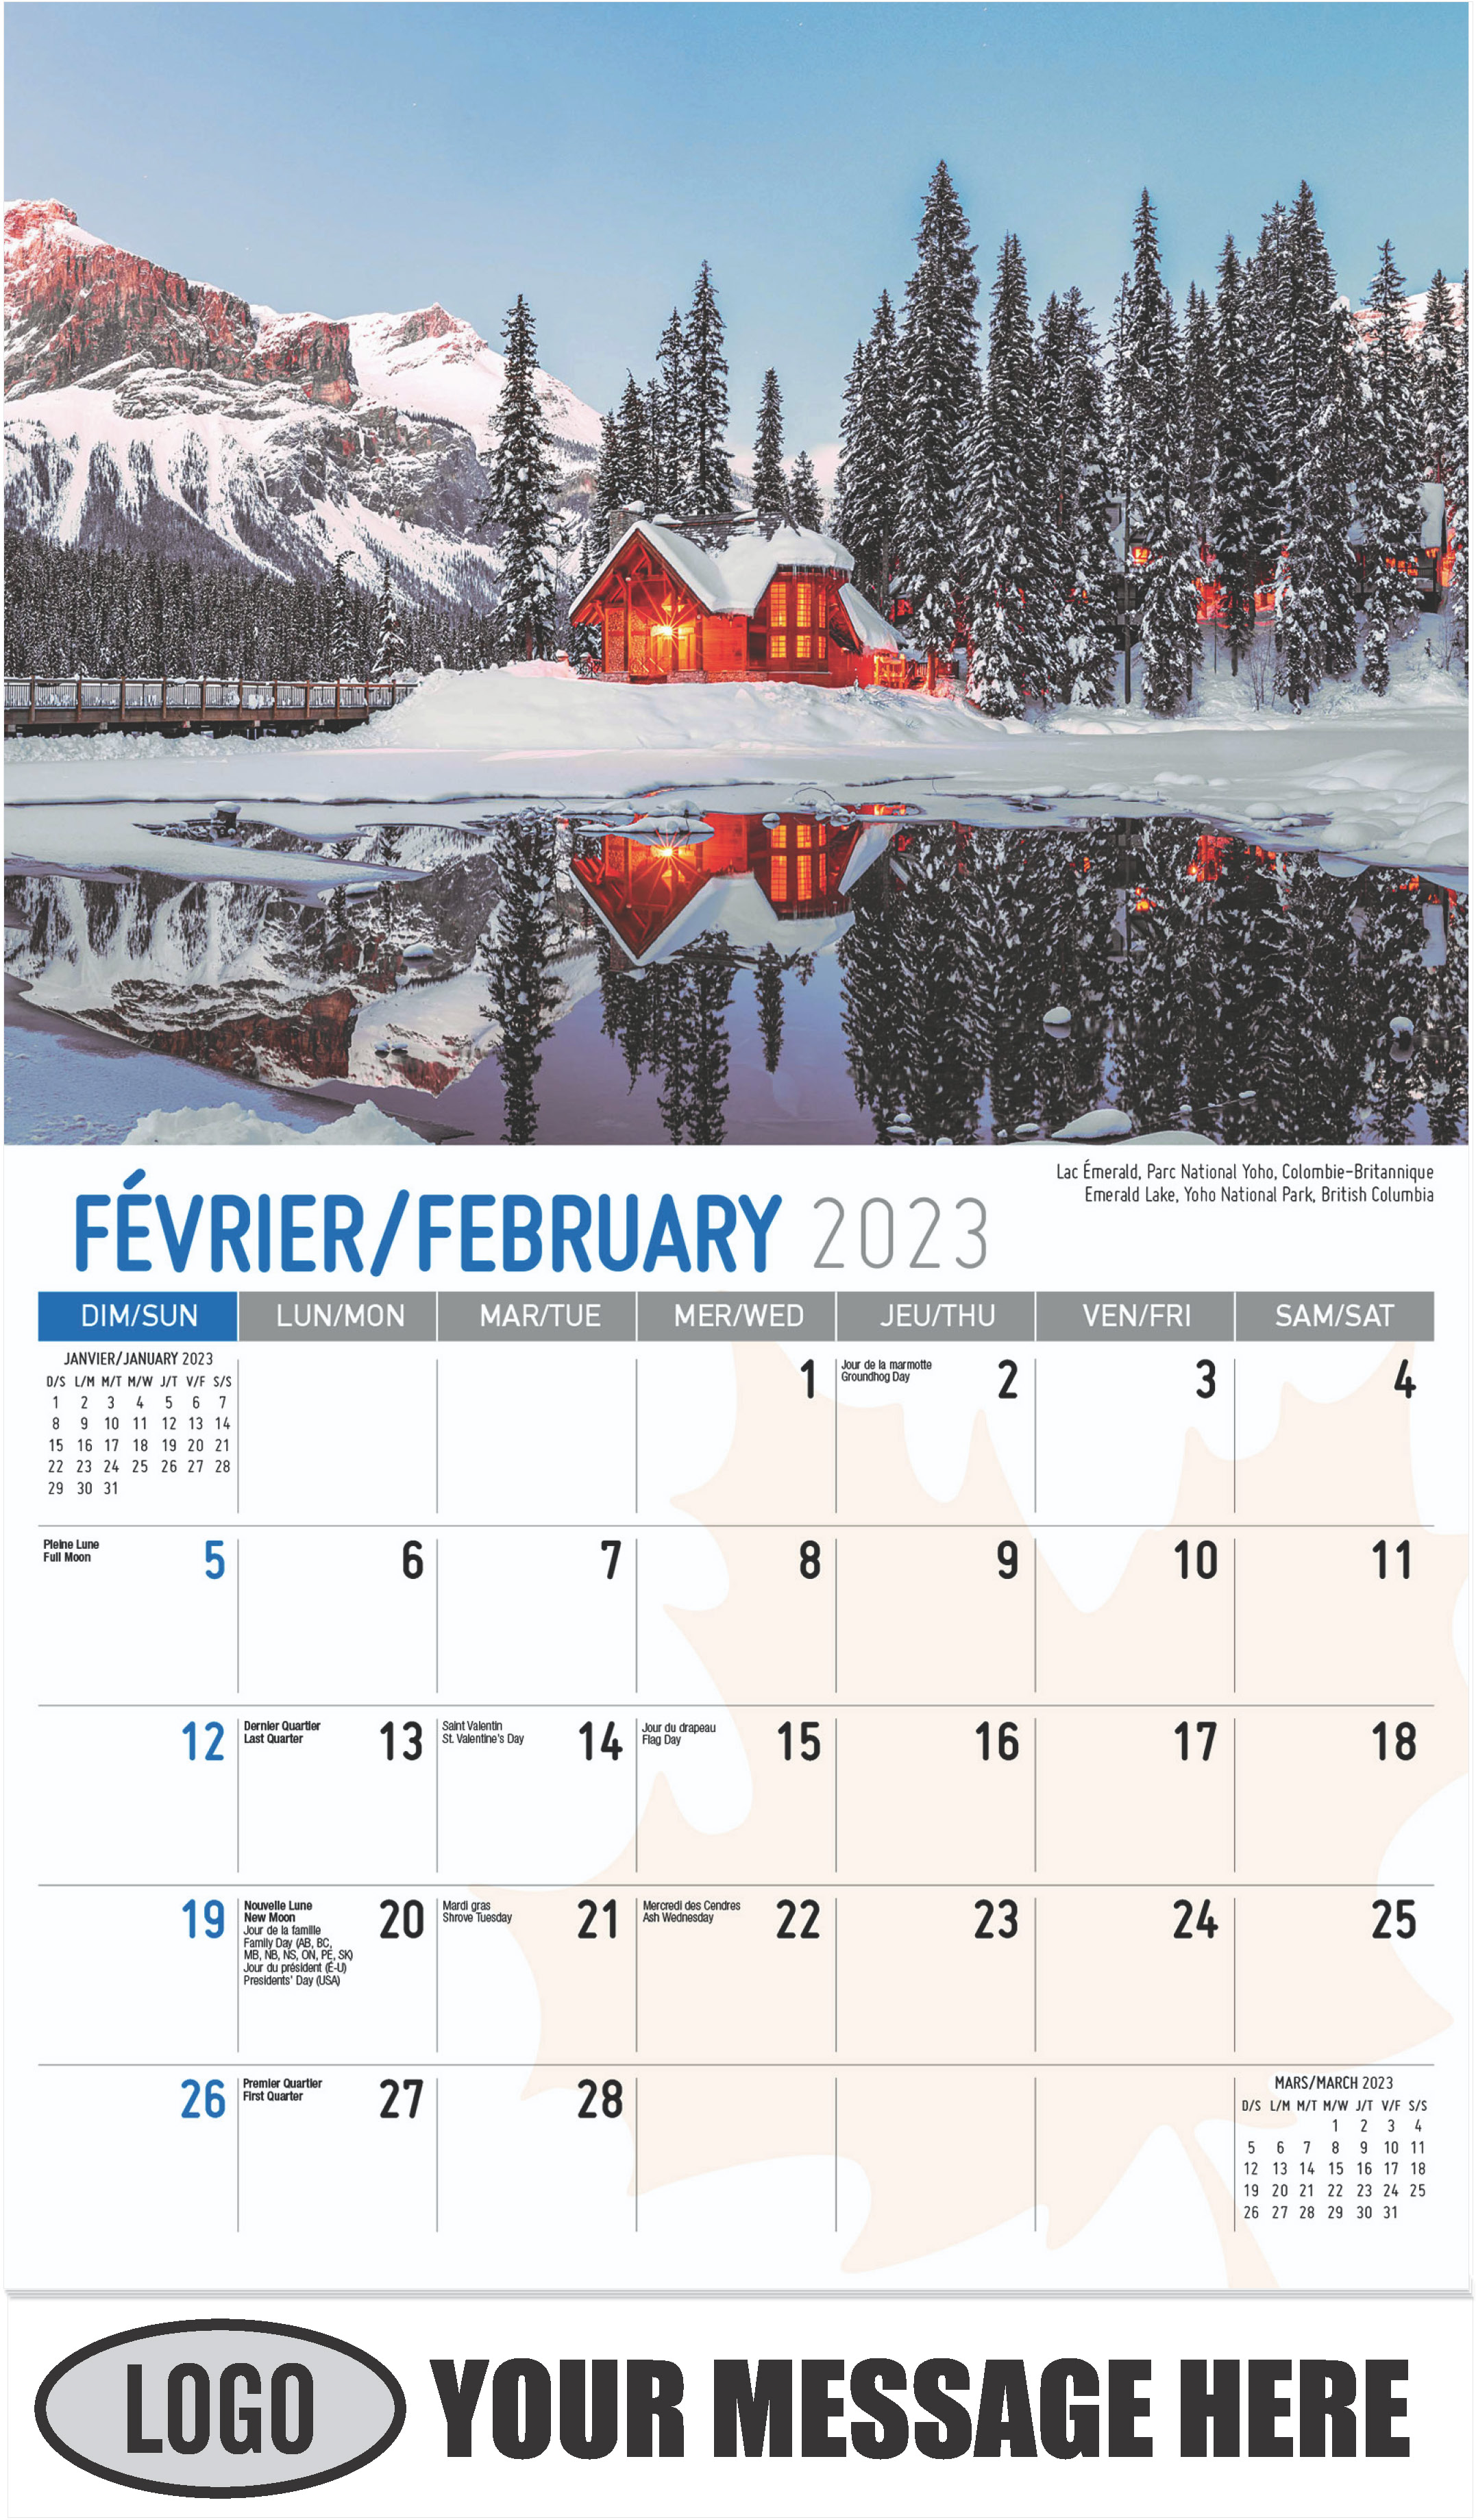 Emerald Lake, Yoho National Park, British Columbia - February - Scenes of Canada(French-English bilingual) 2023 Promotional Calendar